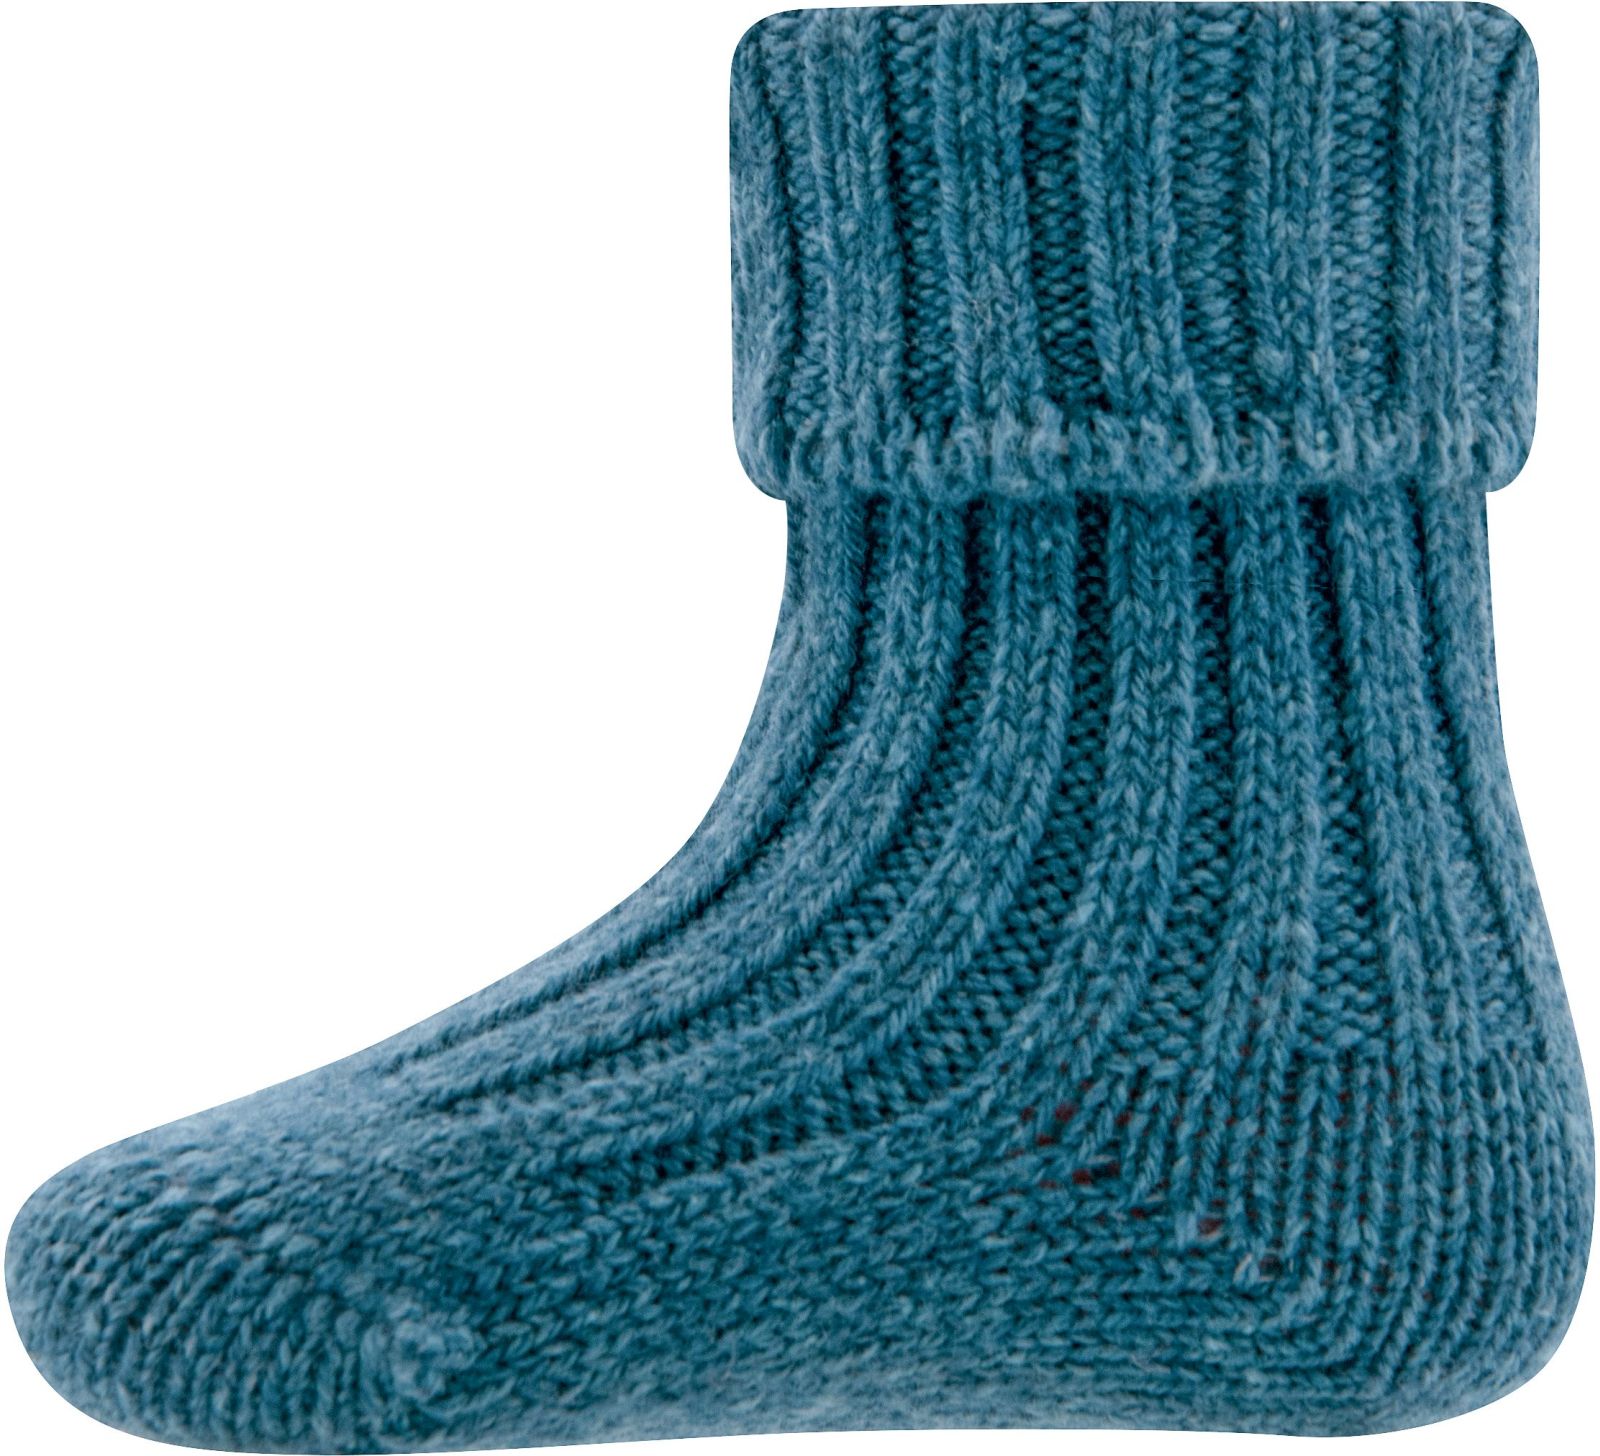 Ewers Socken GOTS Wolle - stahlblau 19-22